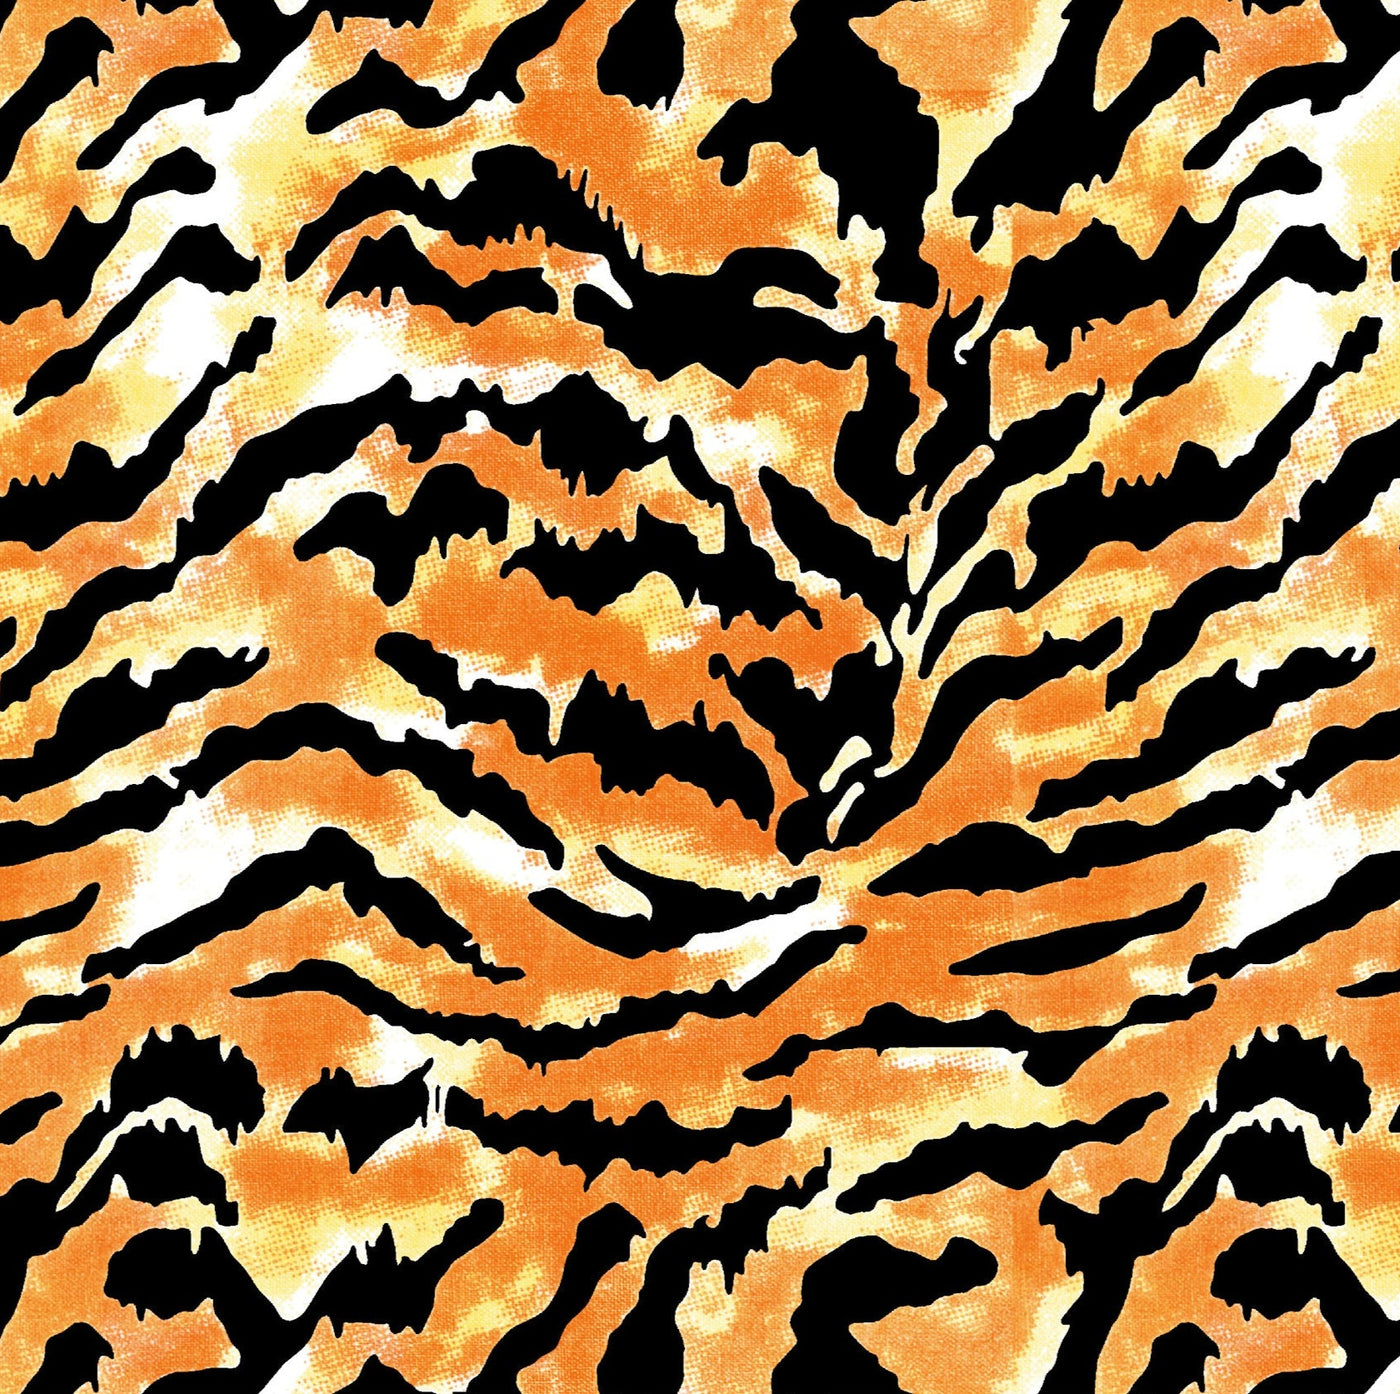 MDG - Animal Skin Print Tiger